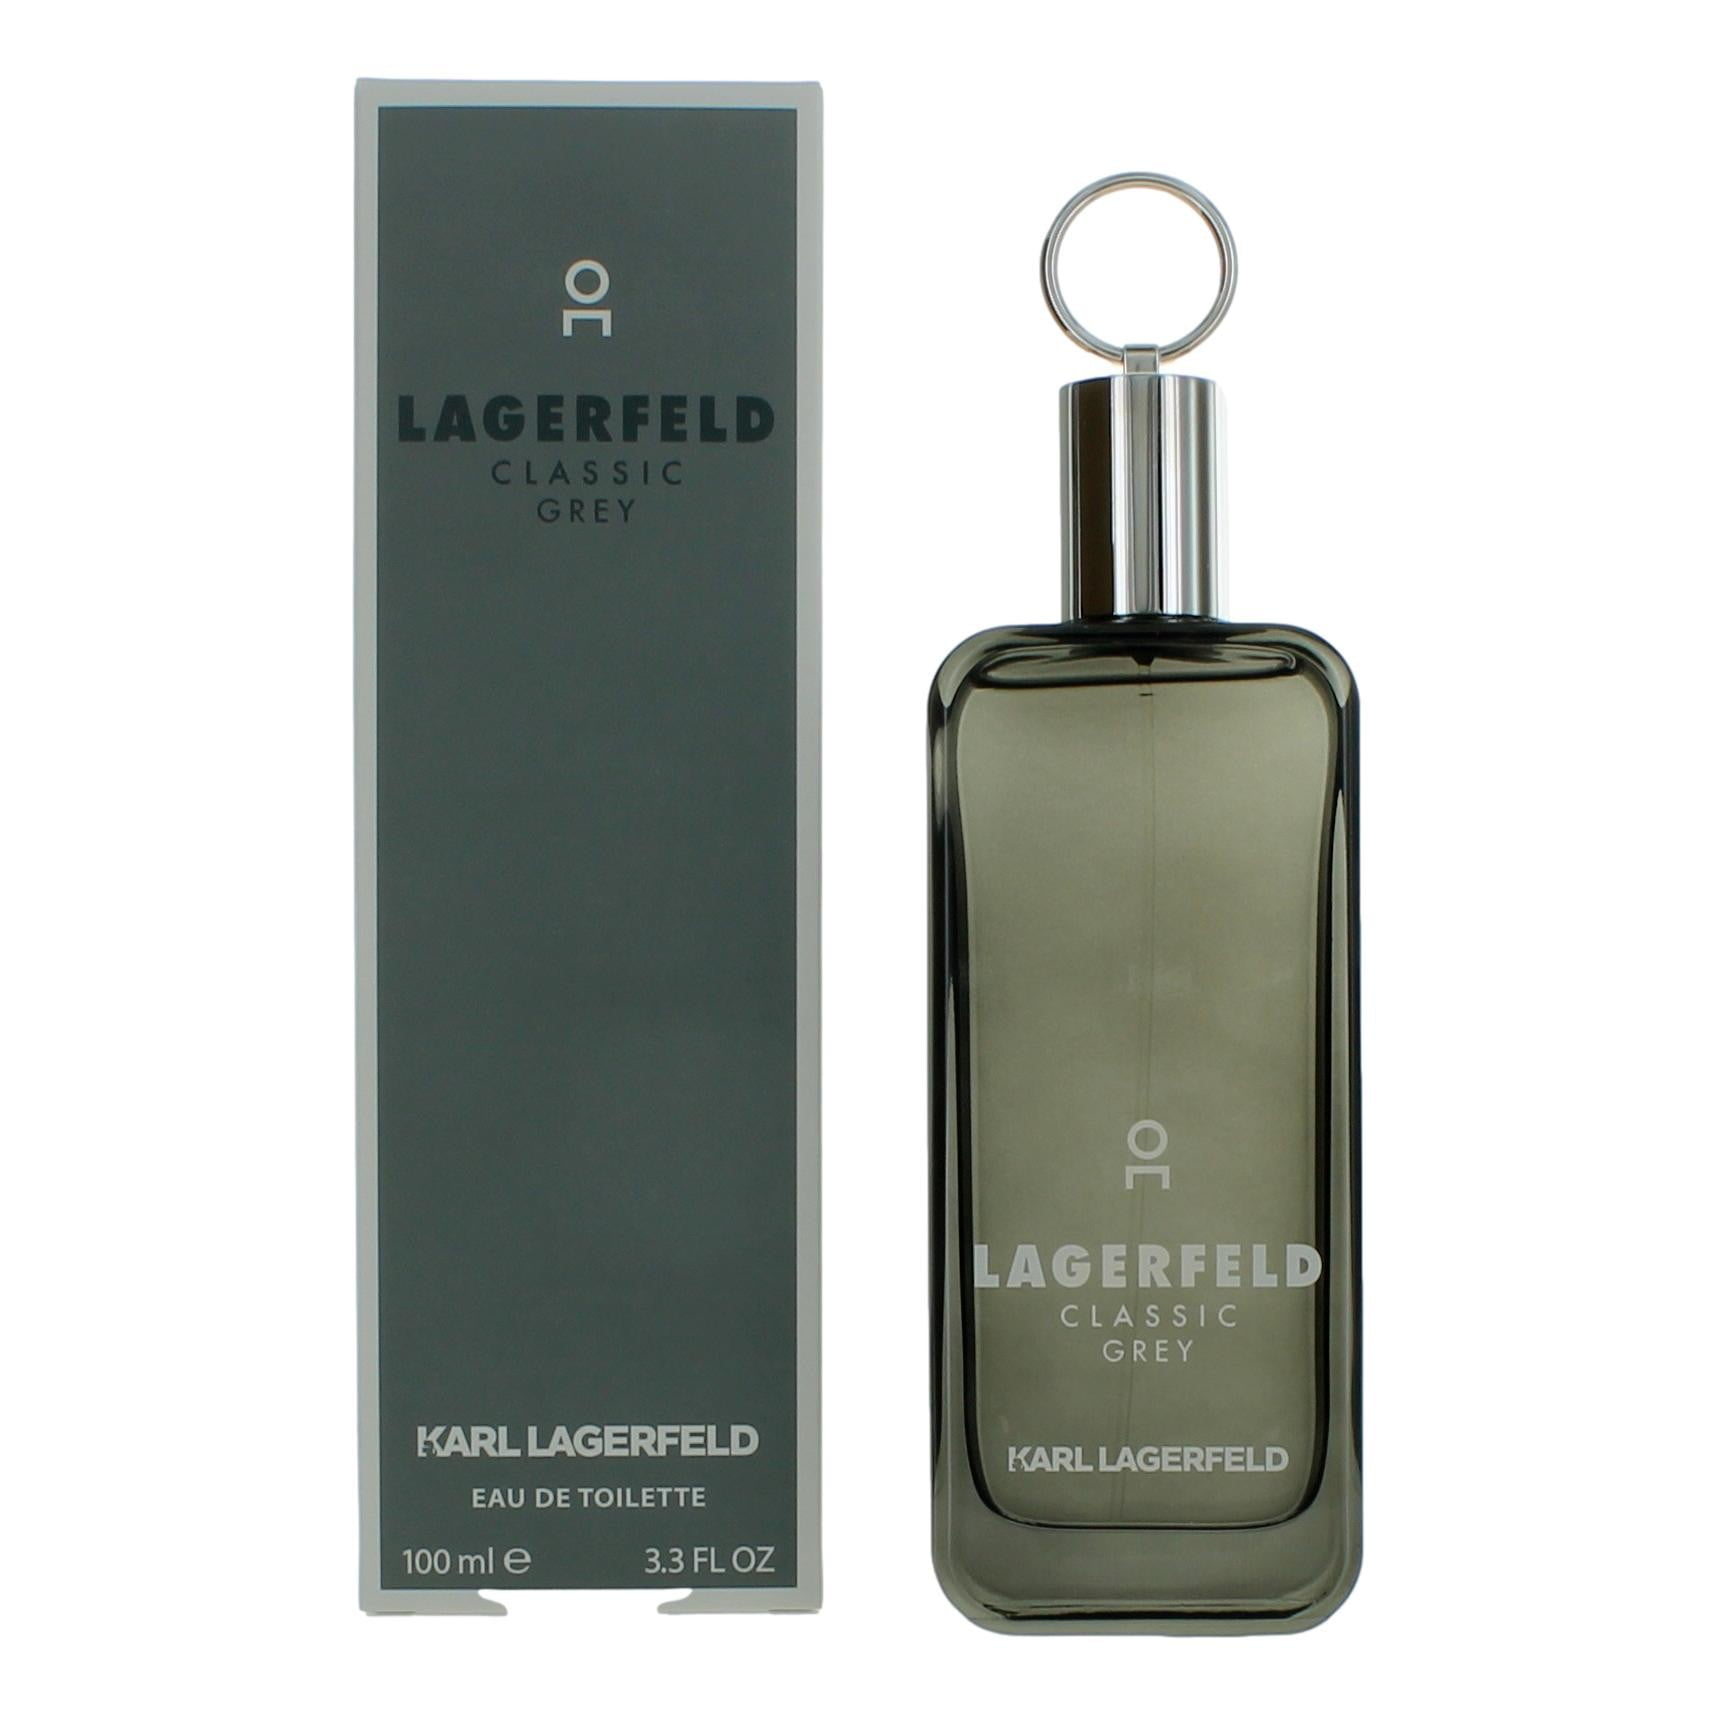 Lagerfeld Classic Grey by Karl Lagerfeld for Men - 3.3 oz EDT Spray ...